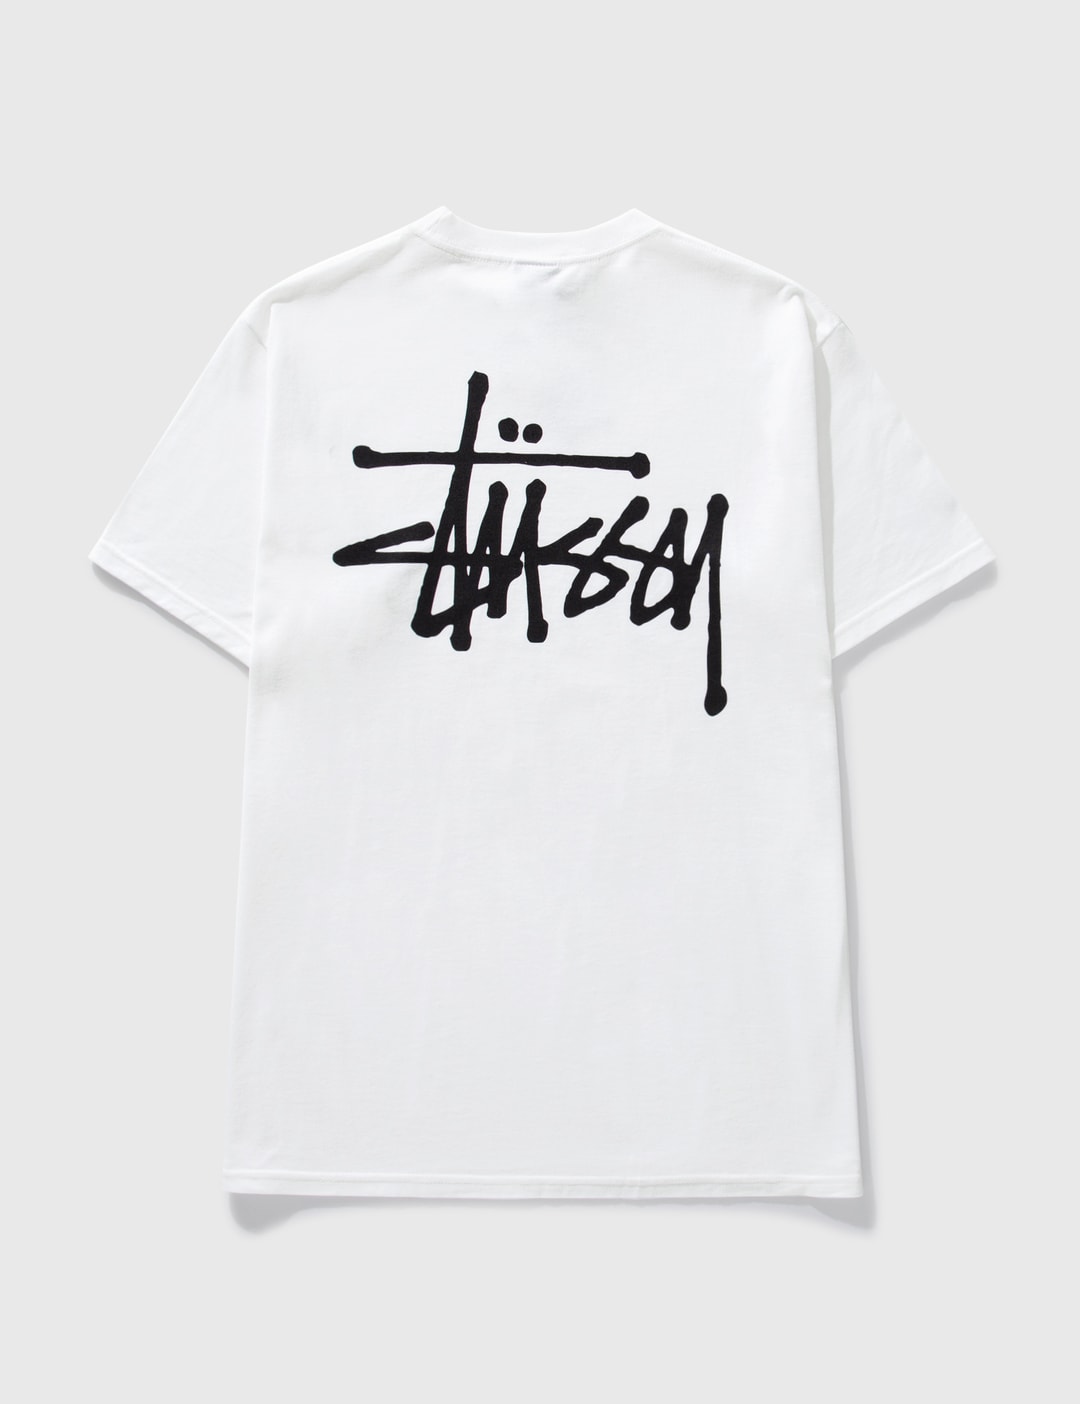 Stüssy - Basic Stüssy T-shirt | HBX - Globally Curated Fashion and ...